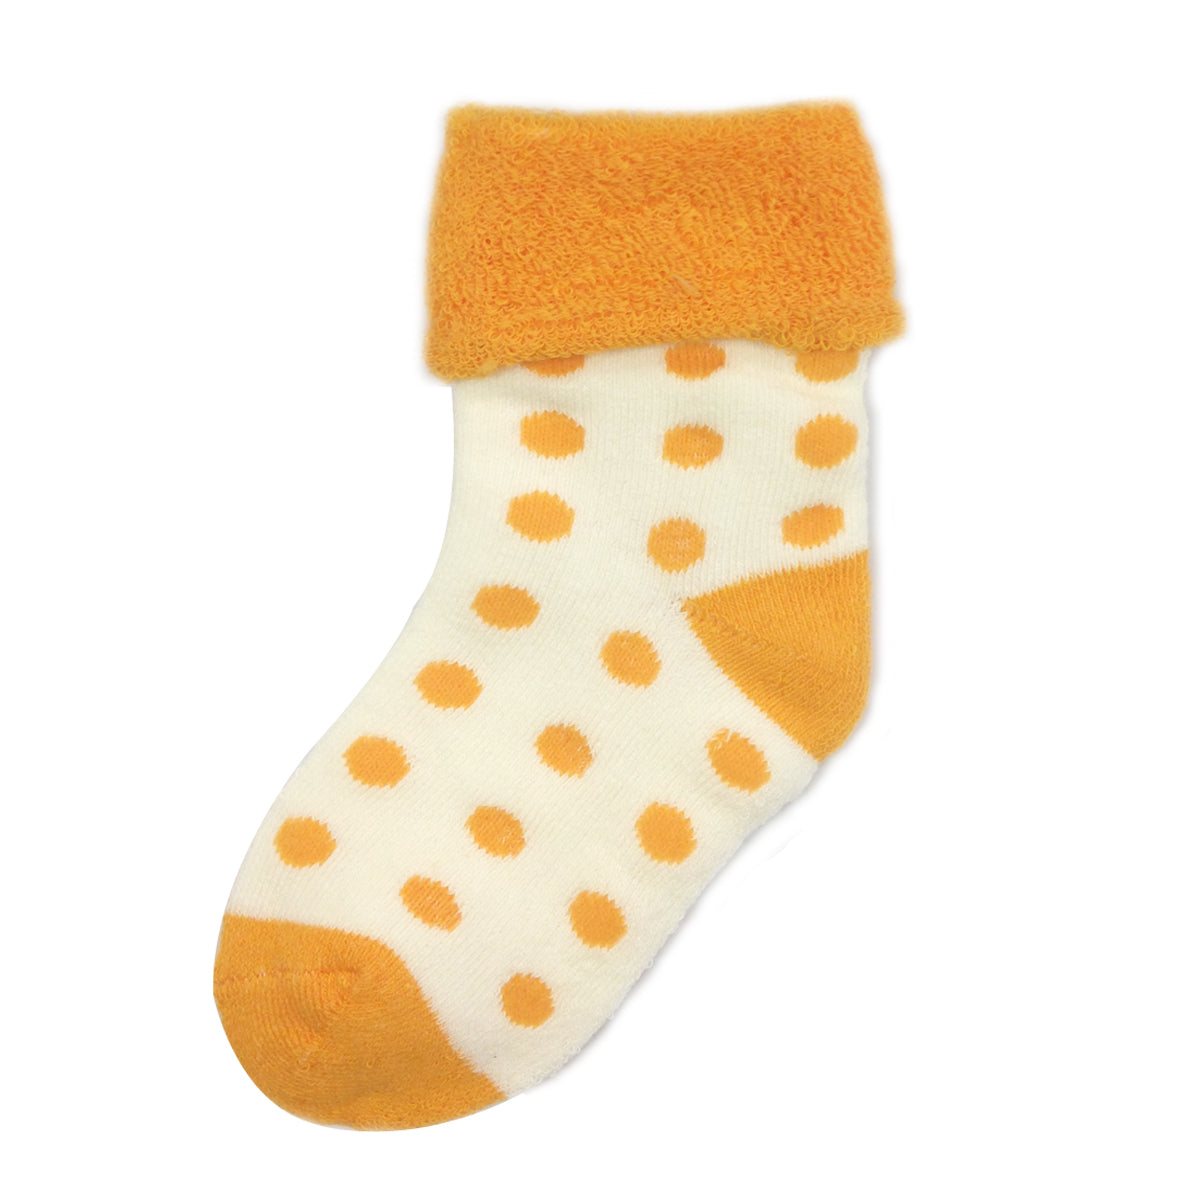 Wrapables Polka Dot Baby Socks, Set of 5 [ A63737, A63738, A63740, A63741, A63742]